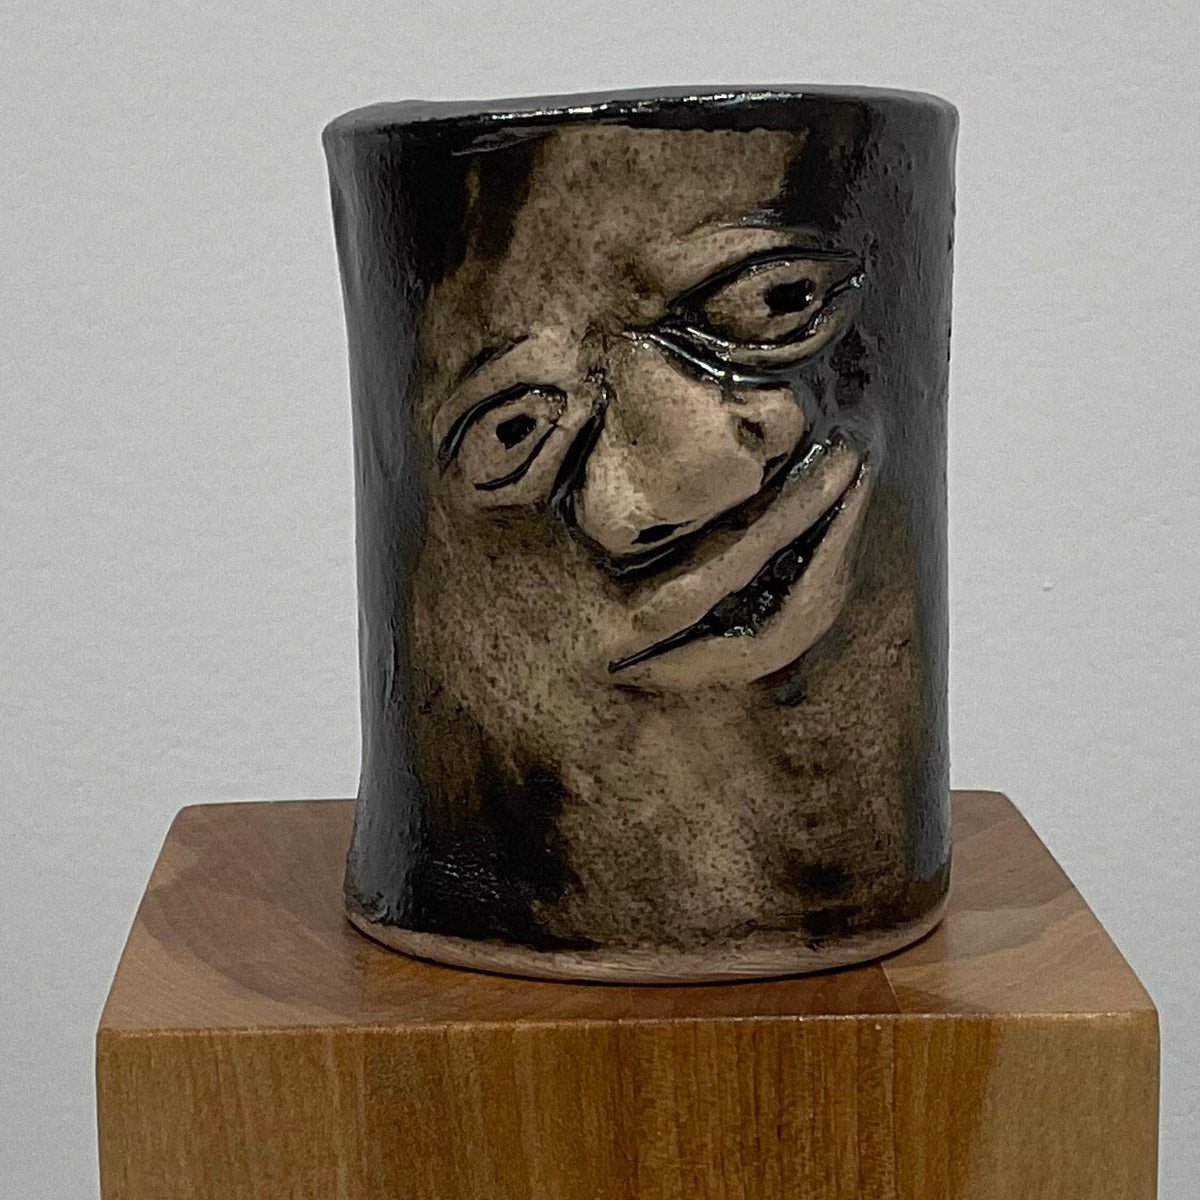 Mug Shot, SERGE No. 27, ceramic